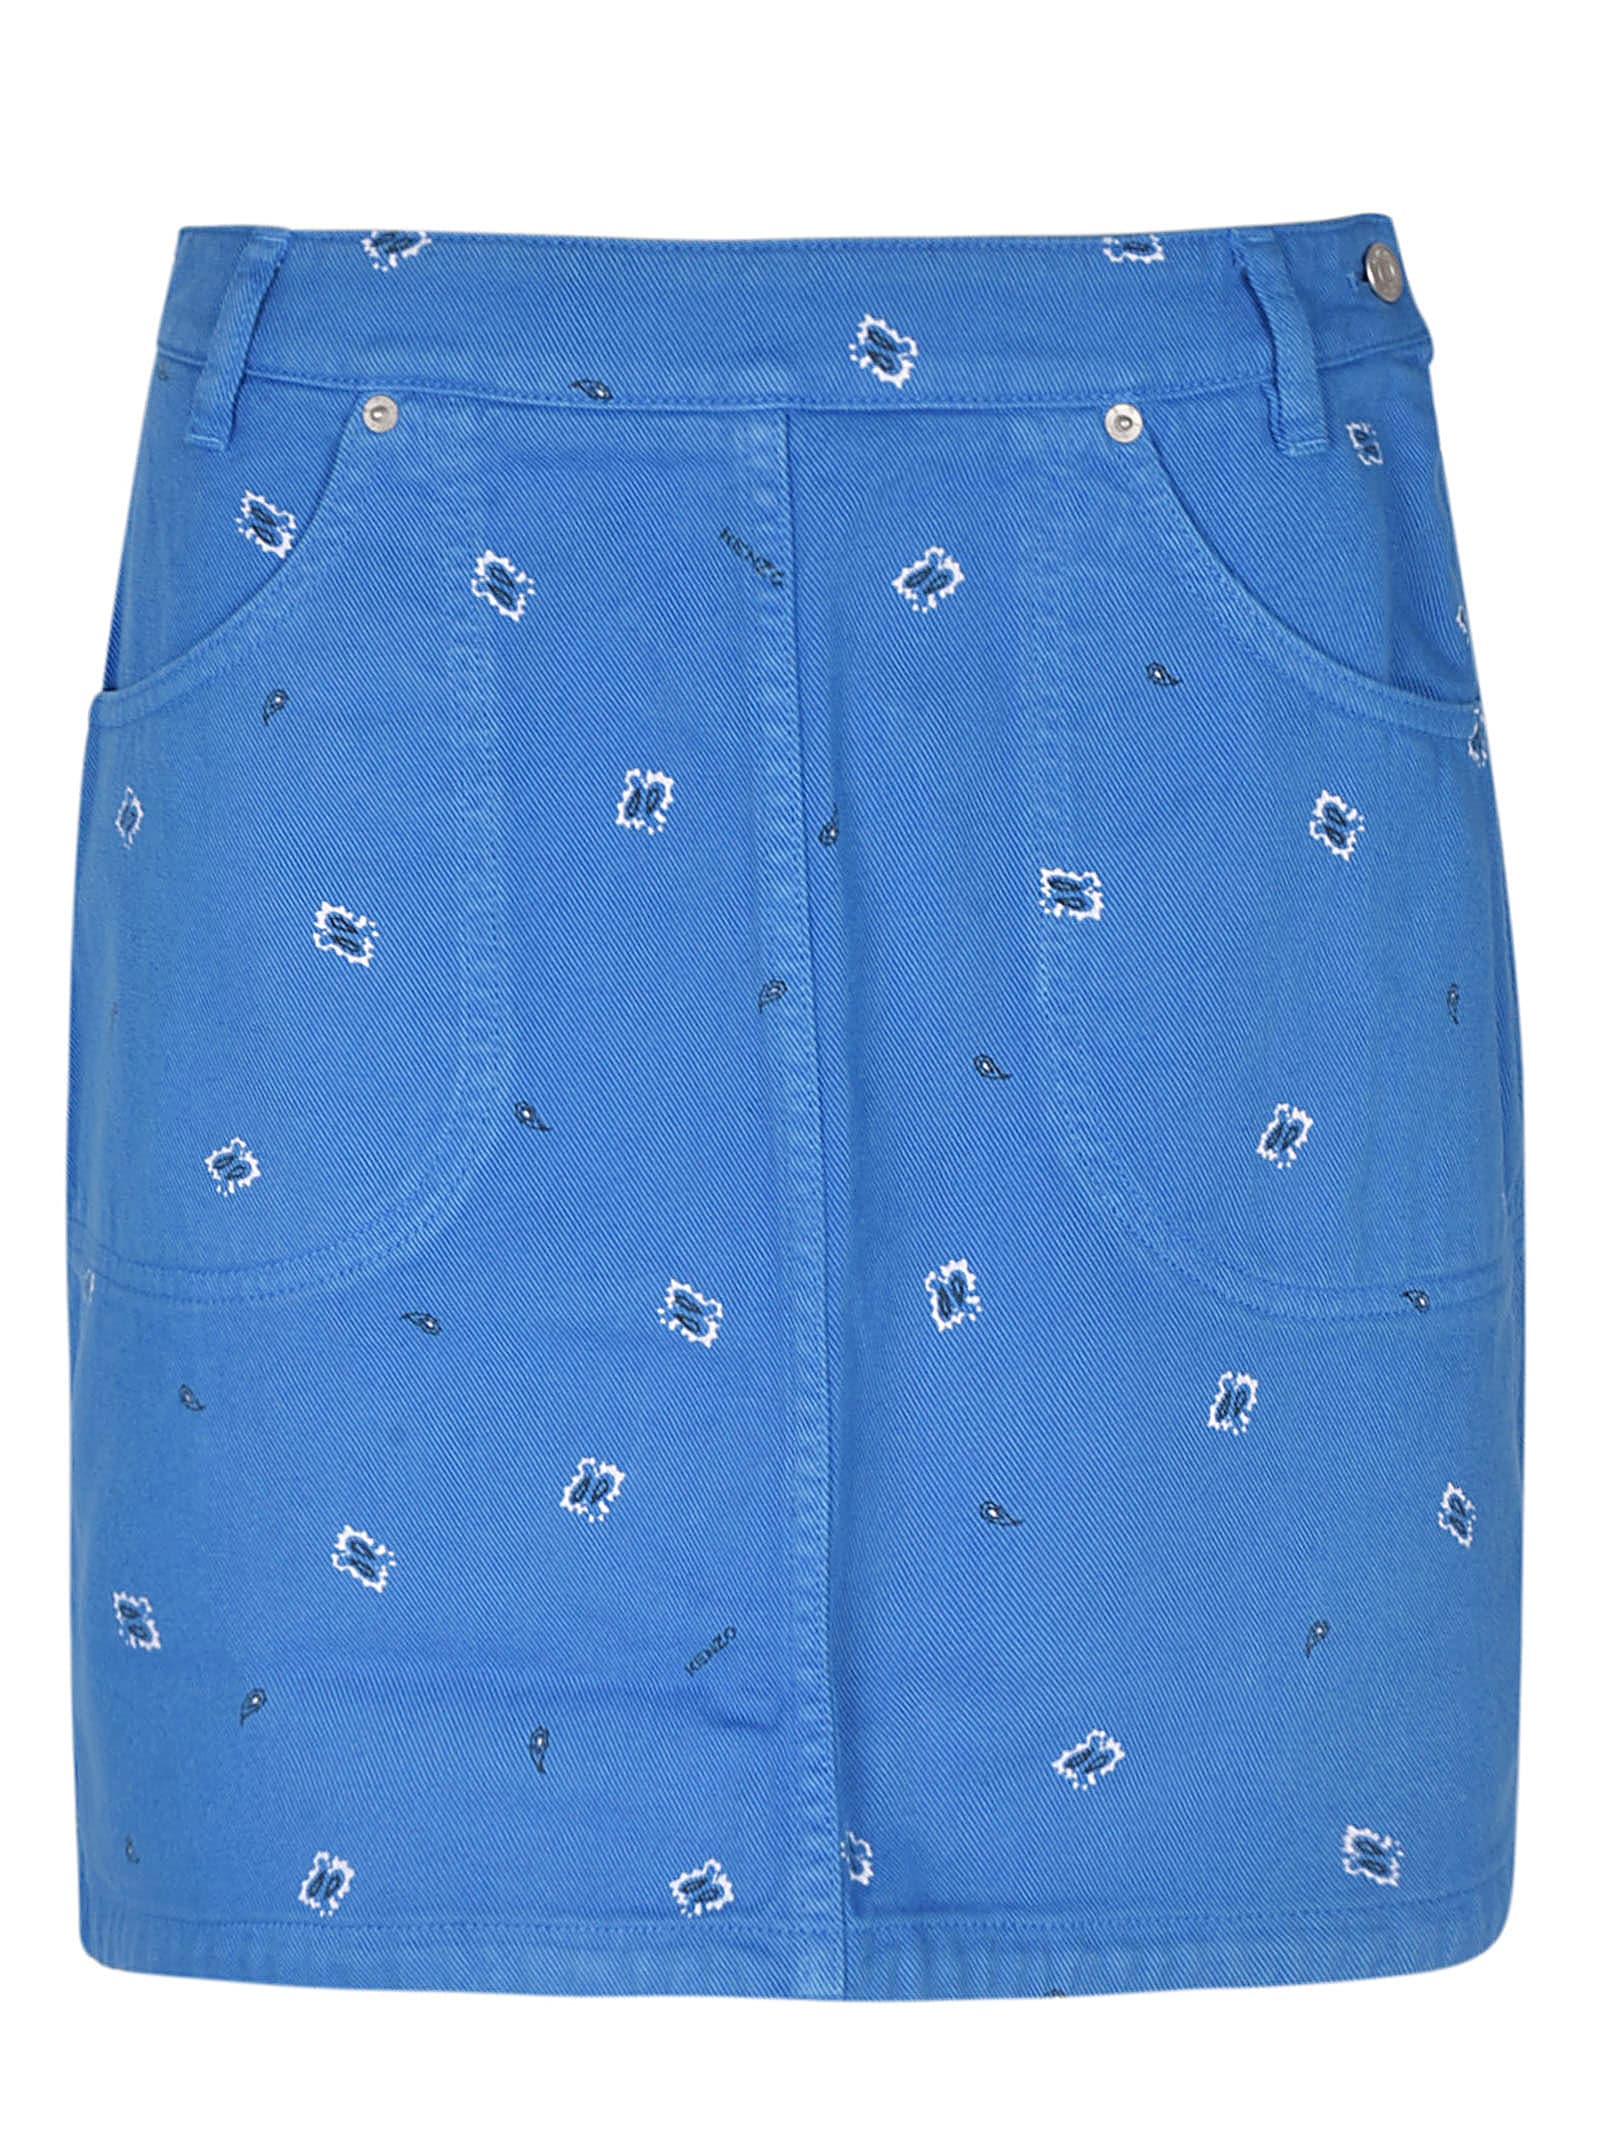 Kenzo Printed Denim Mini Skirt